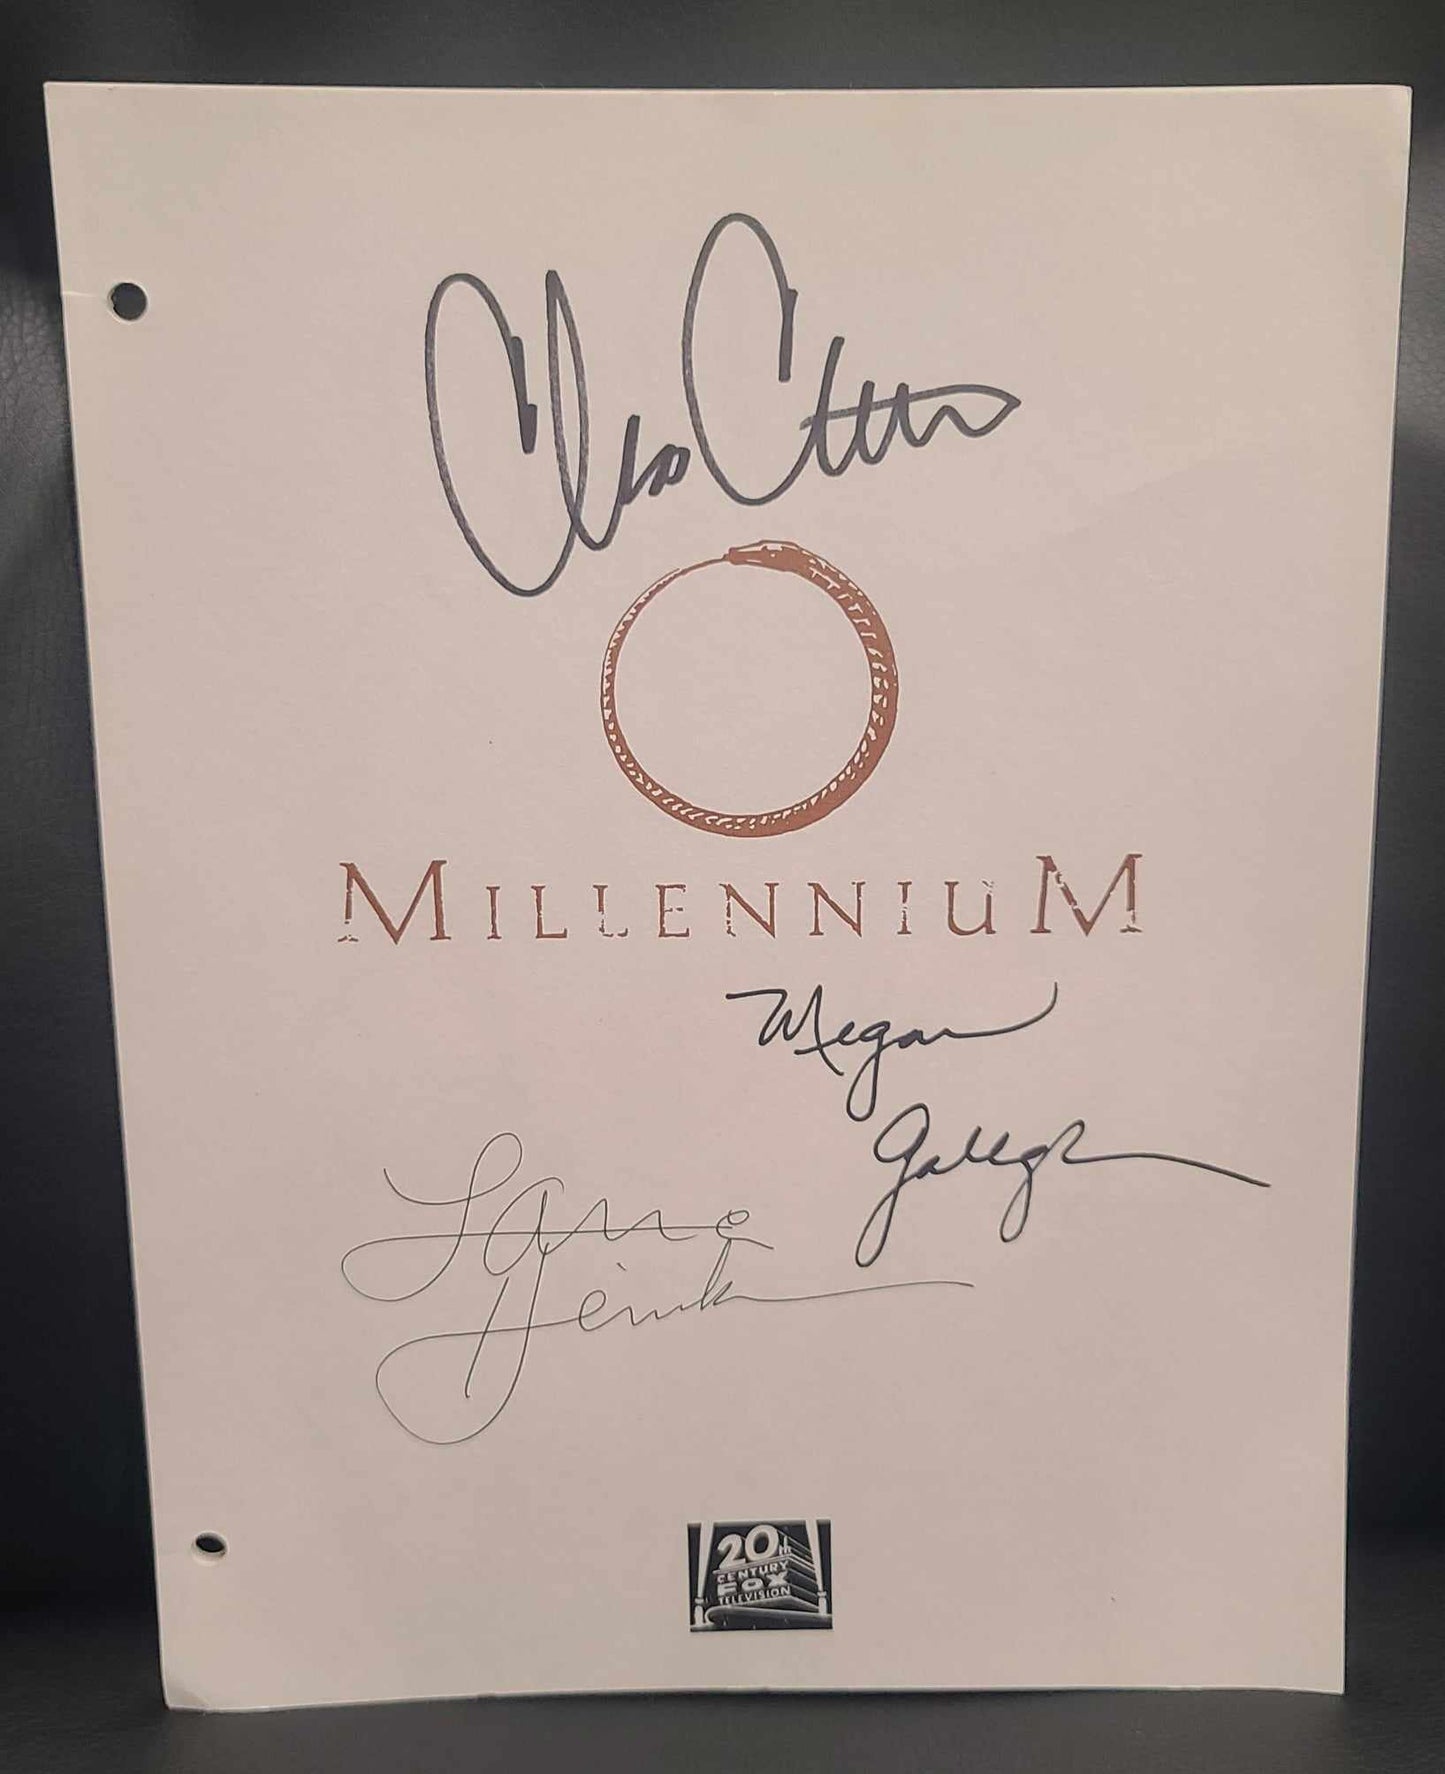 Millennium Script cover autographed by Chris Carter, Lance Hendrickson and Megan Gallagher